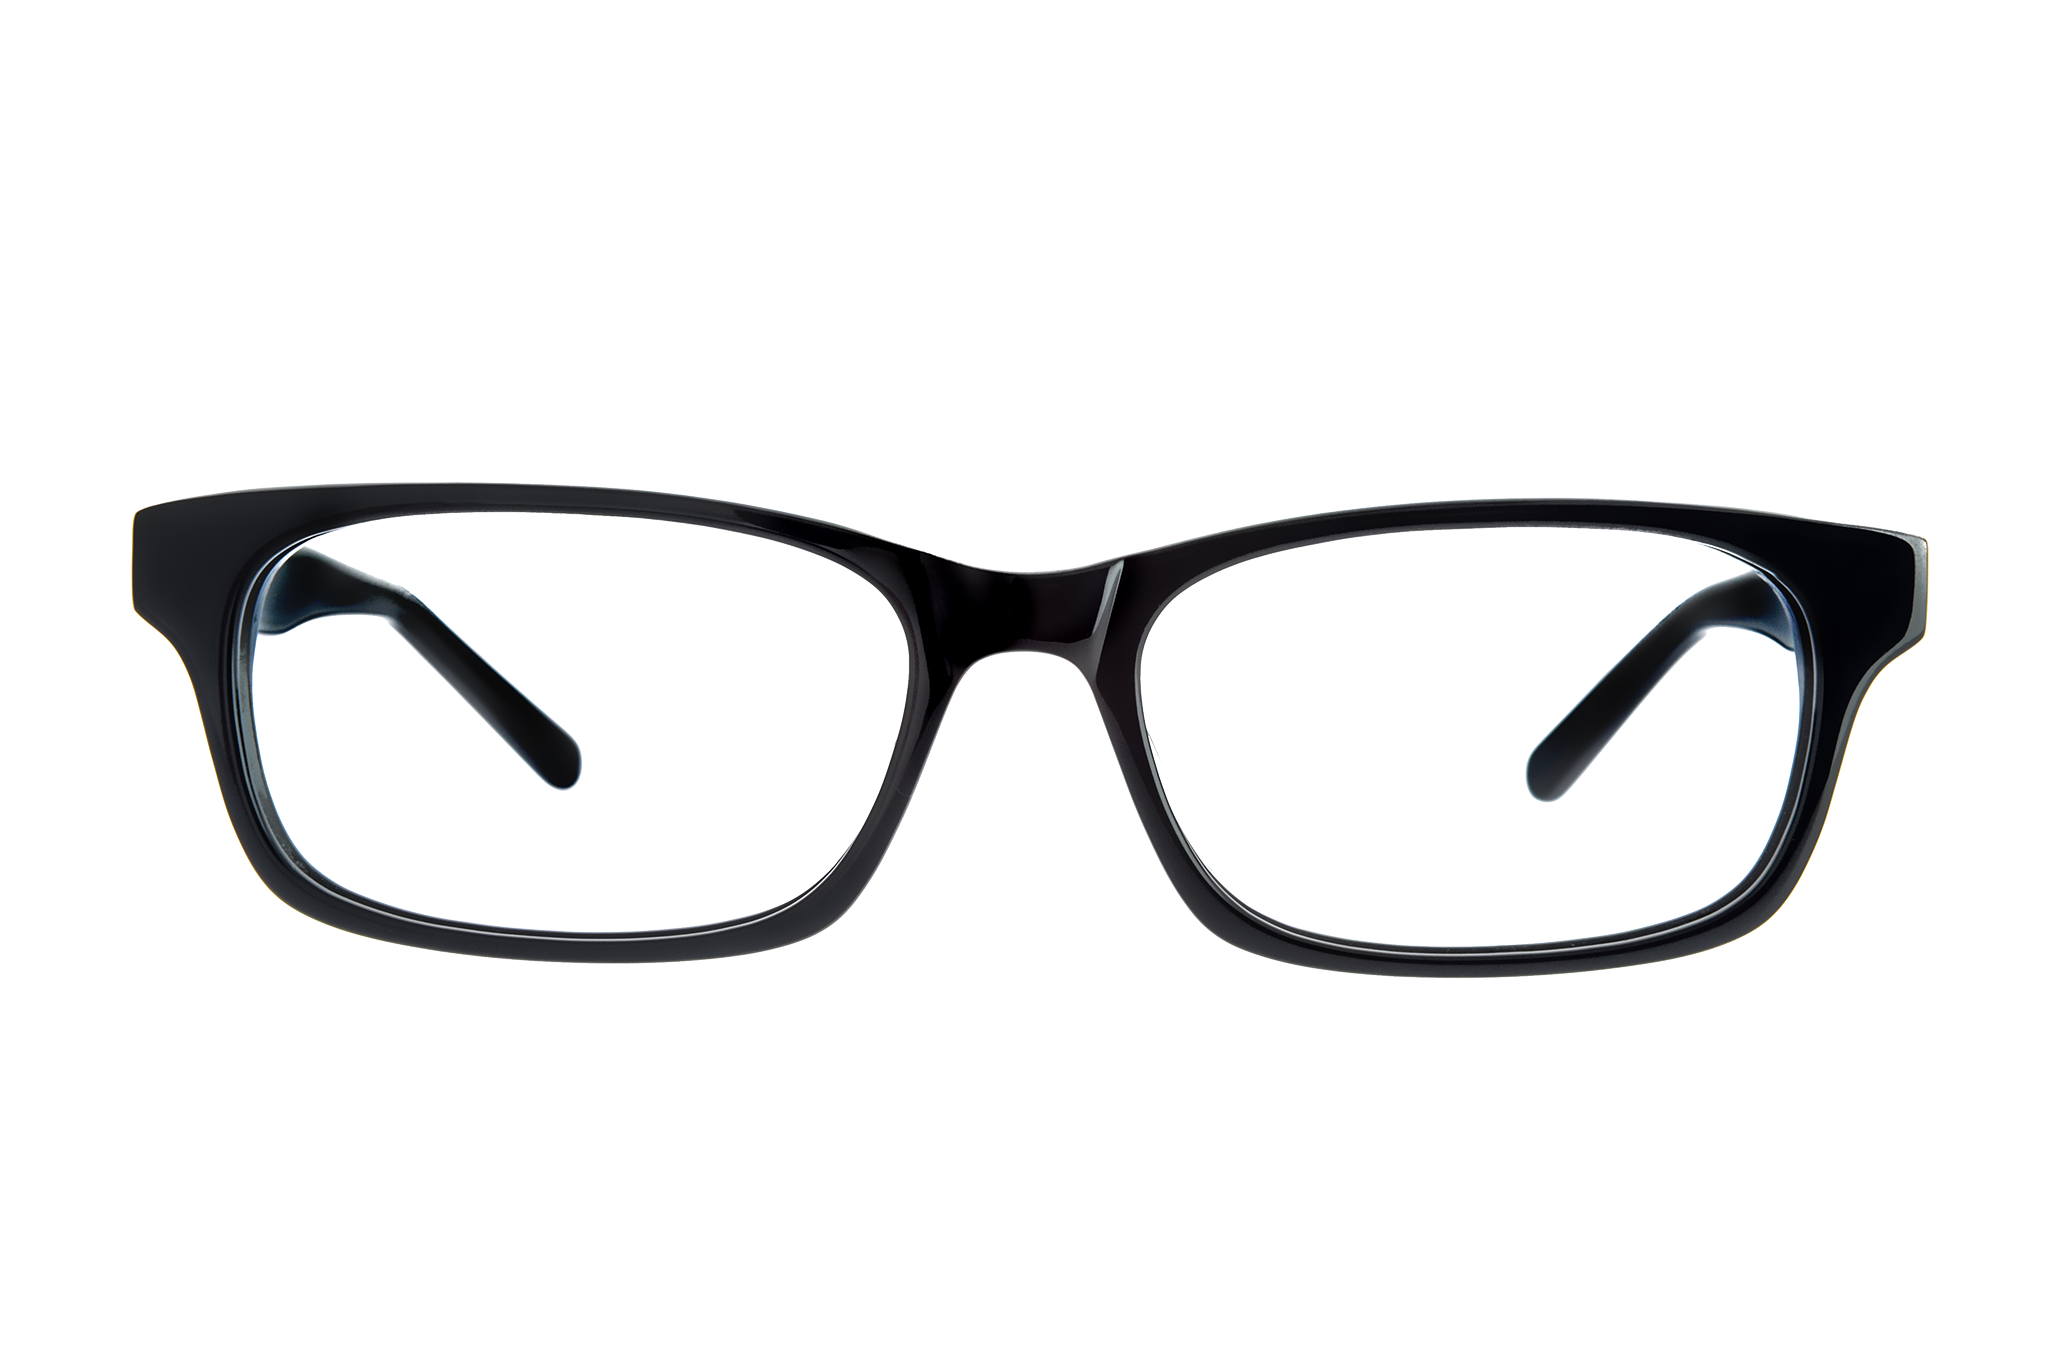 Glasses PNG Image.